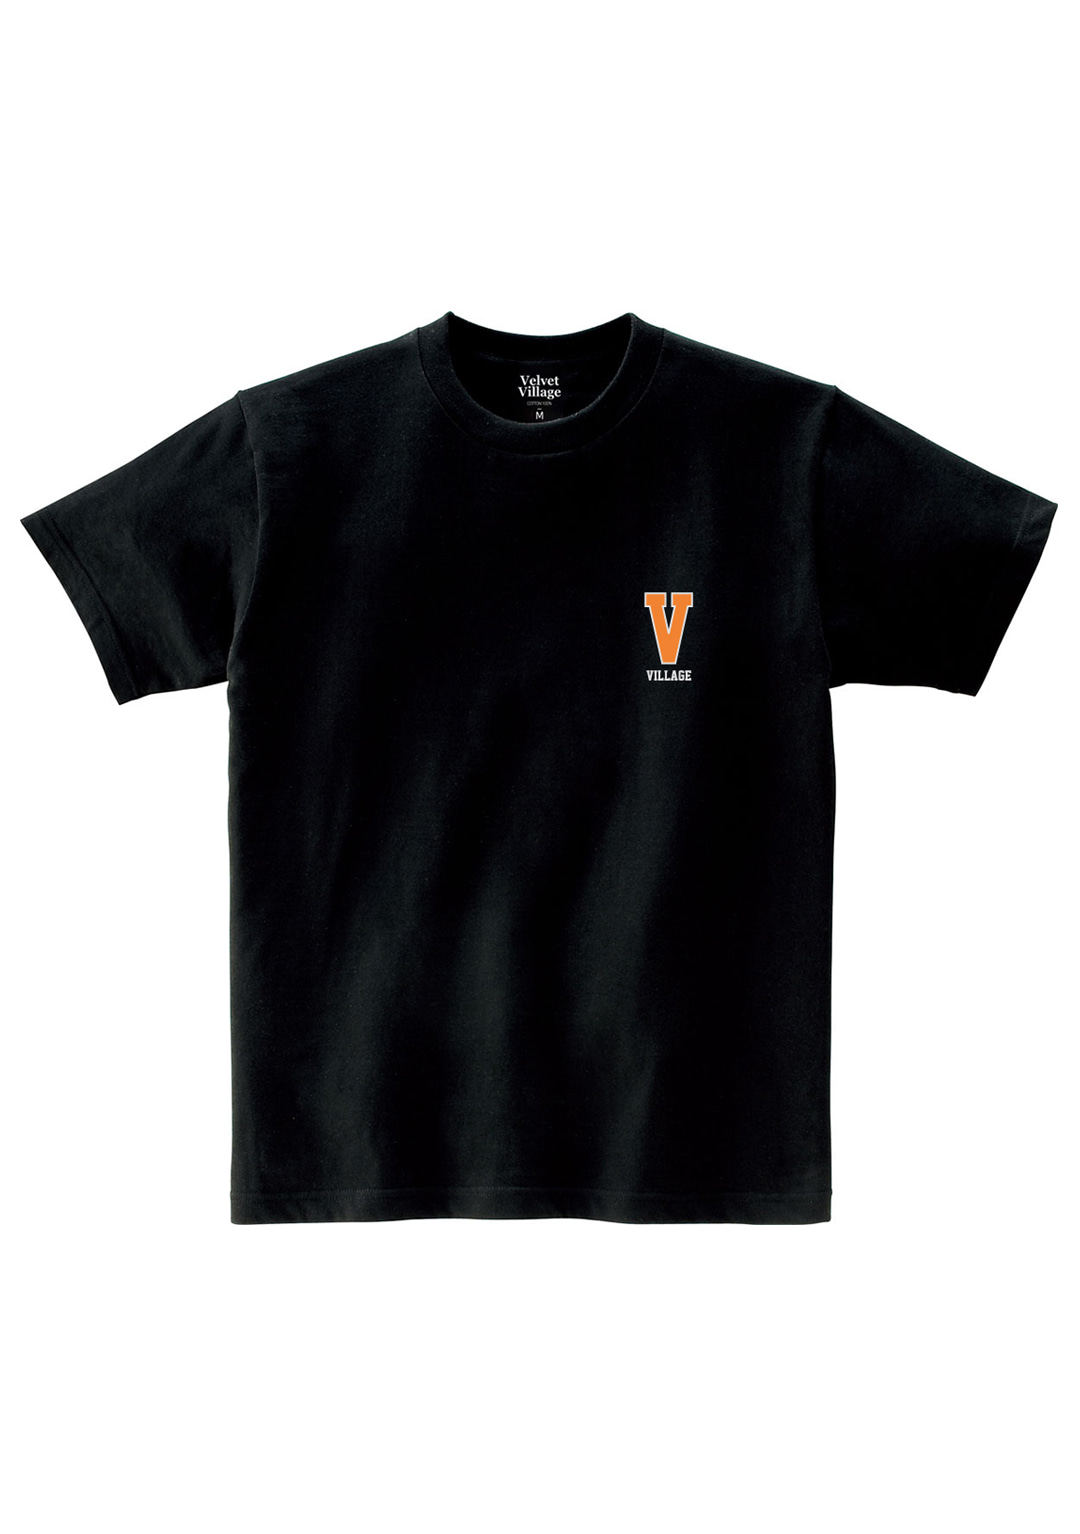 V-village T-shirts (Black)